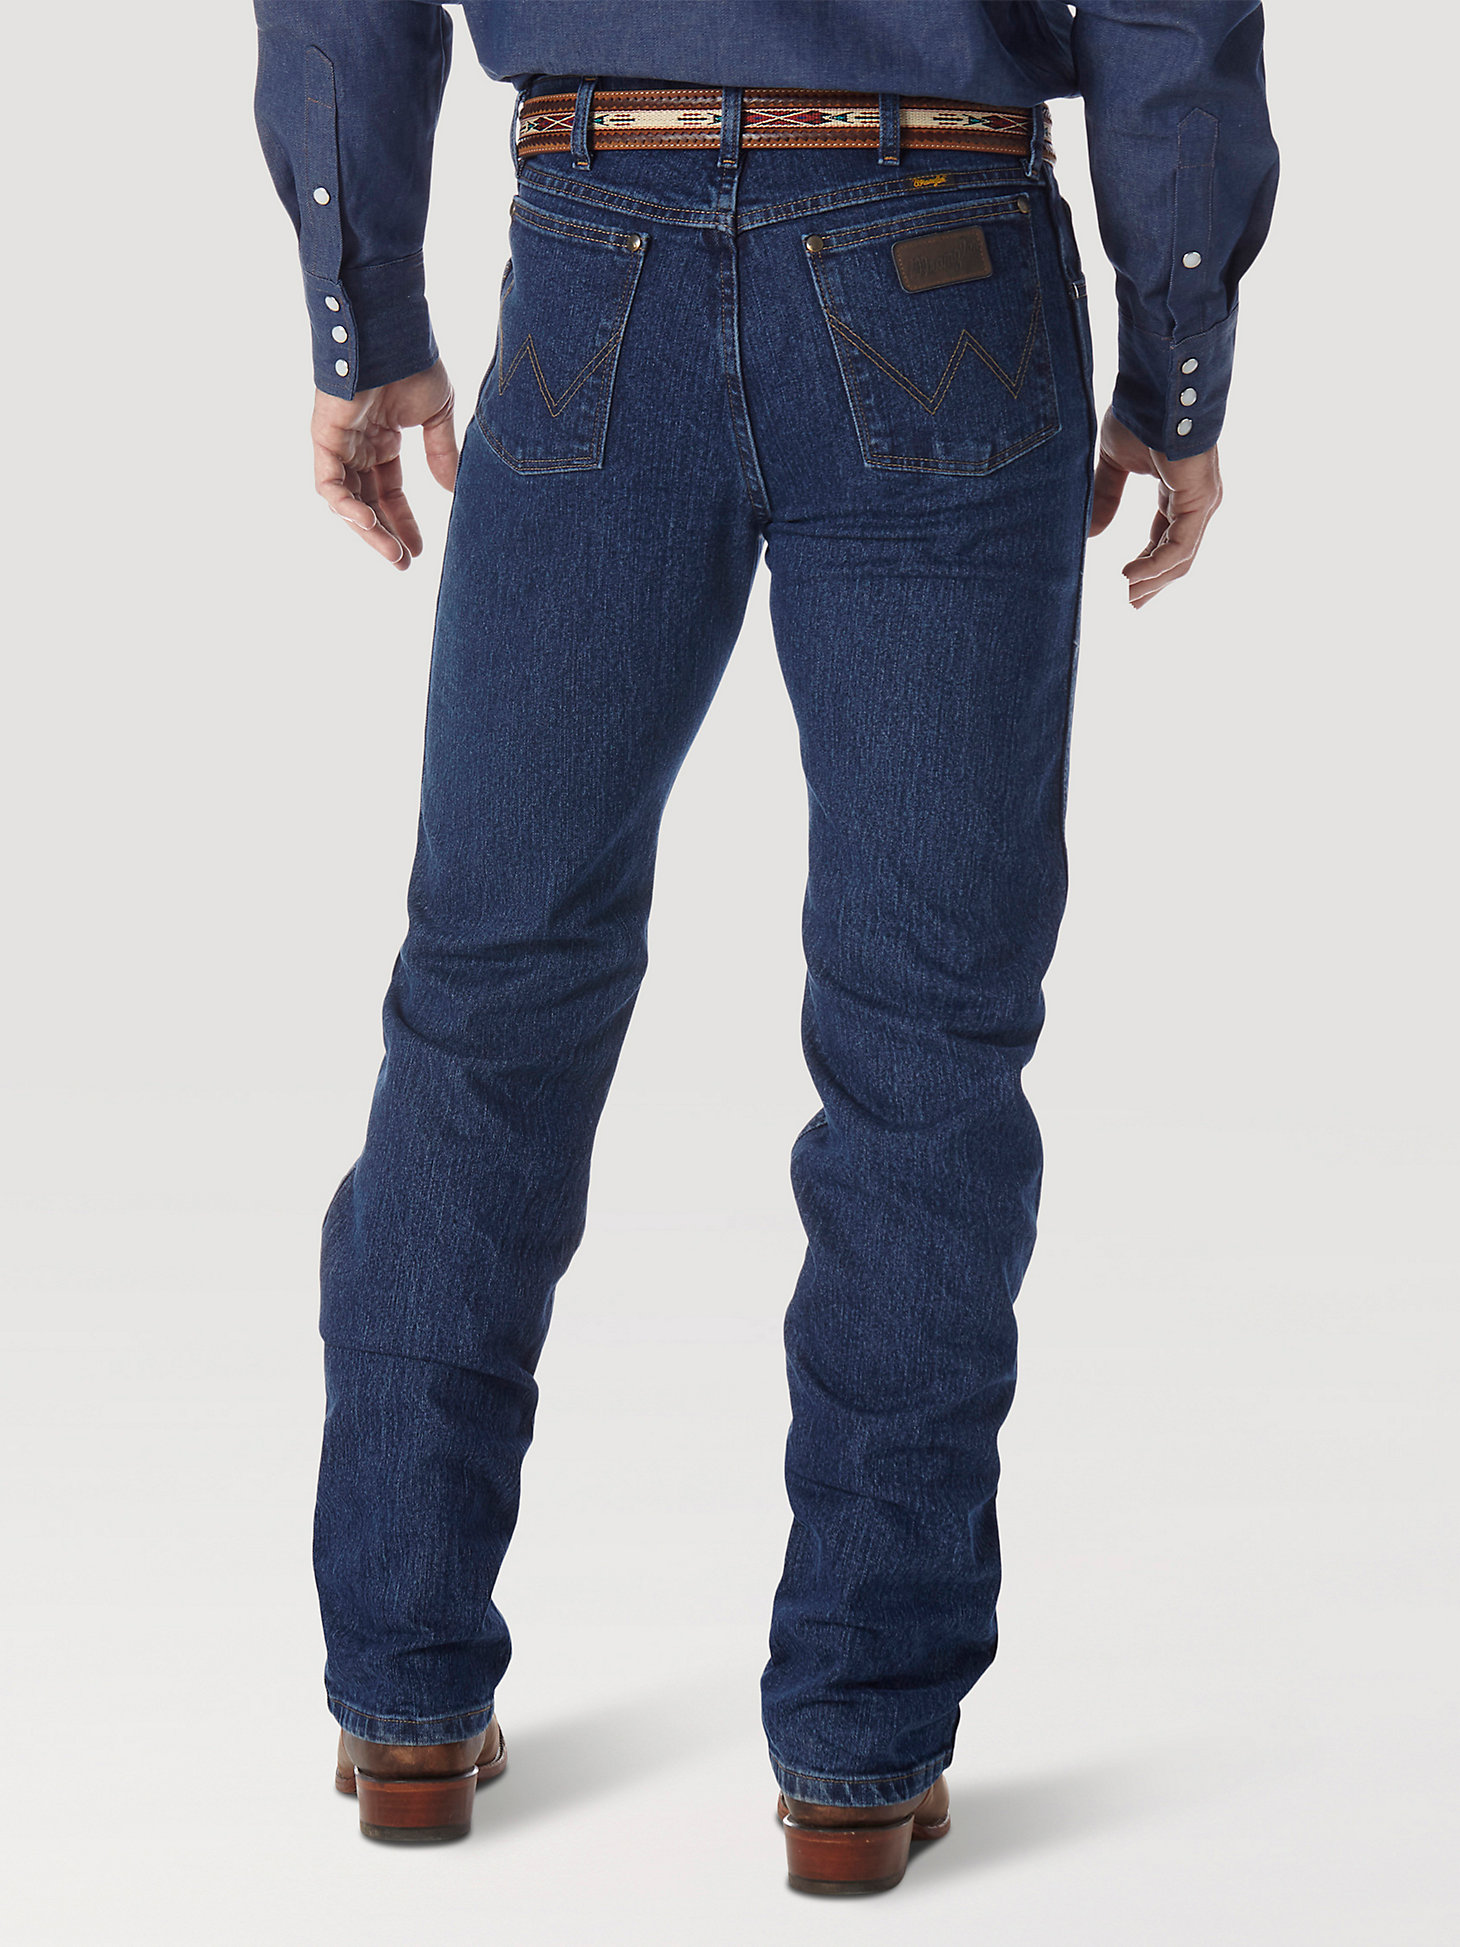 Premium Performance Advanced Comfort Cowboy Cut® Regular Fit Jean in Mid Stone alternative view 1